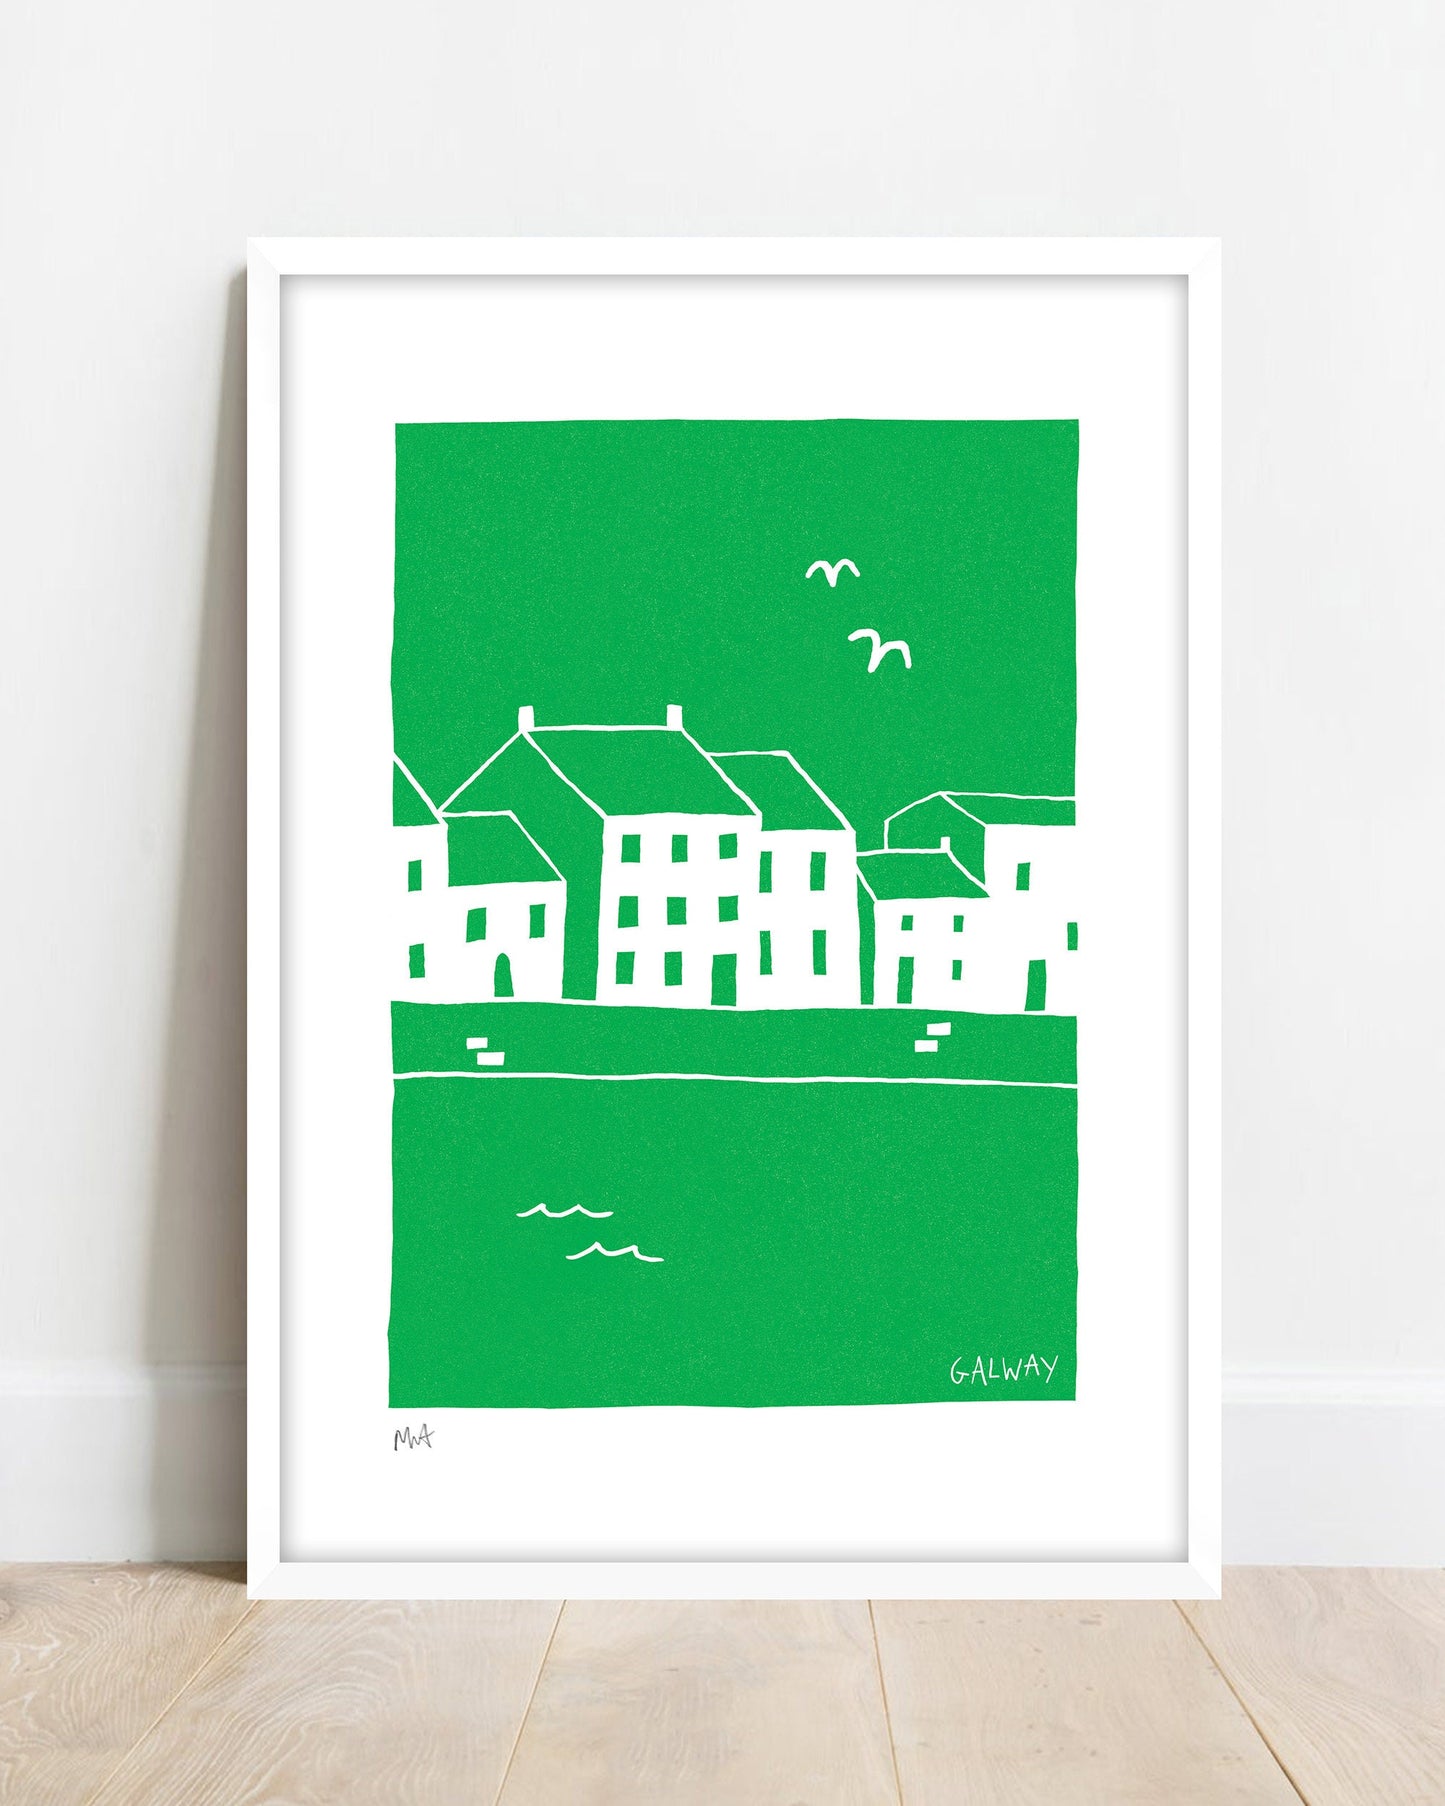 Galway, Ireland – A4 / A3 print, Green